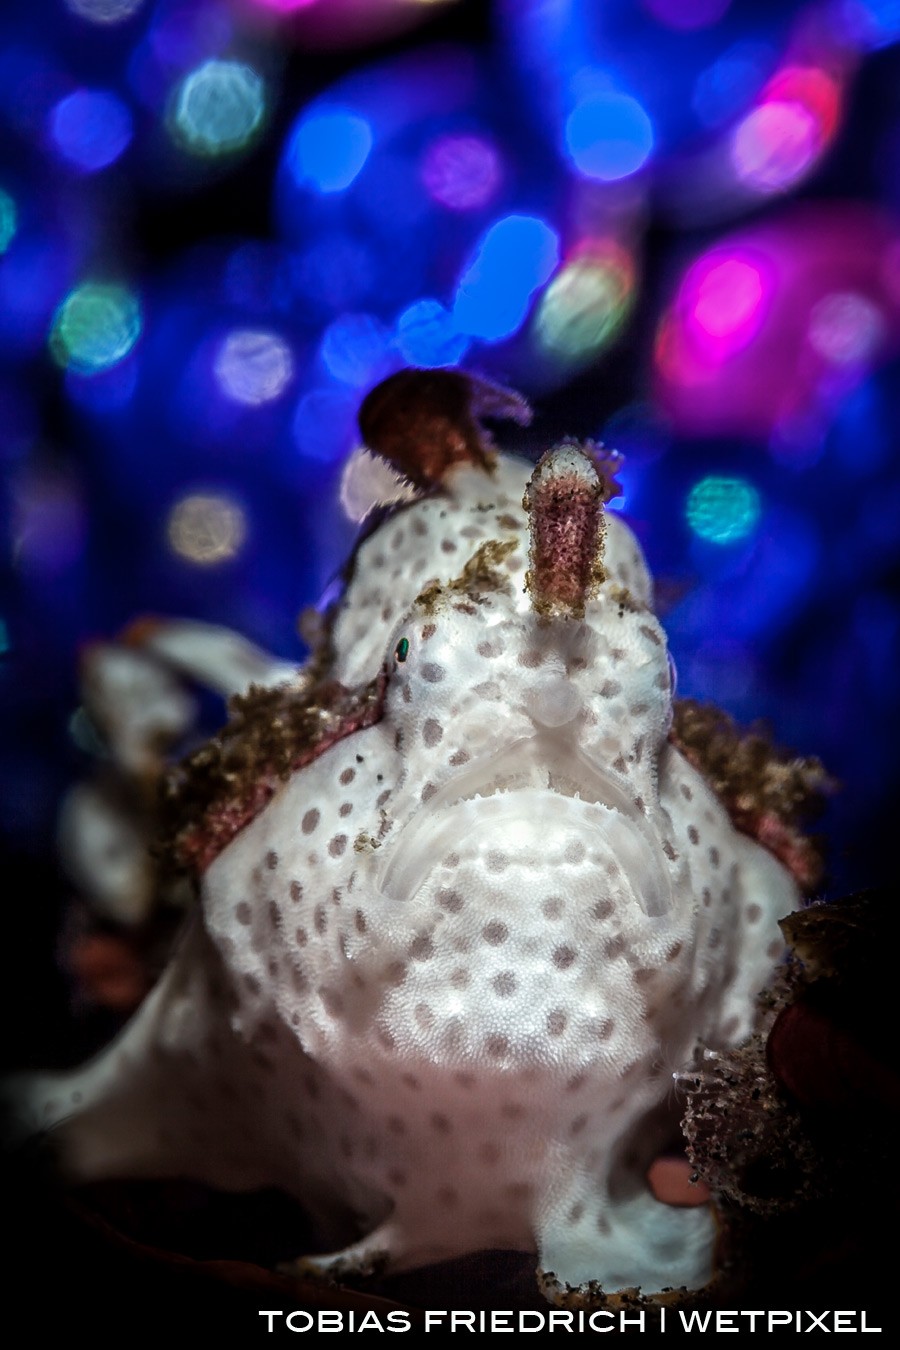 Juvenile warty frogfish (*Antennarius maculatus*) with bubble bokeh background